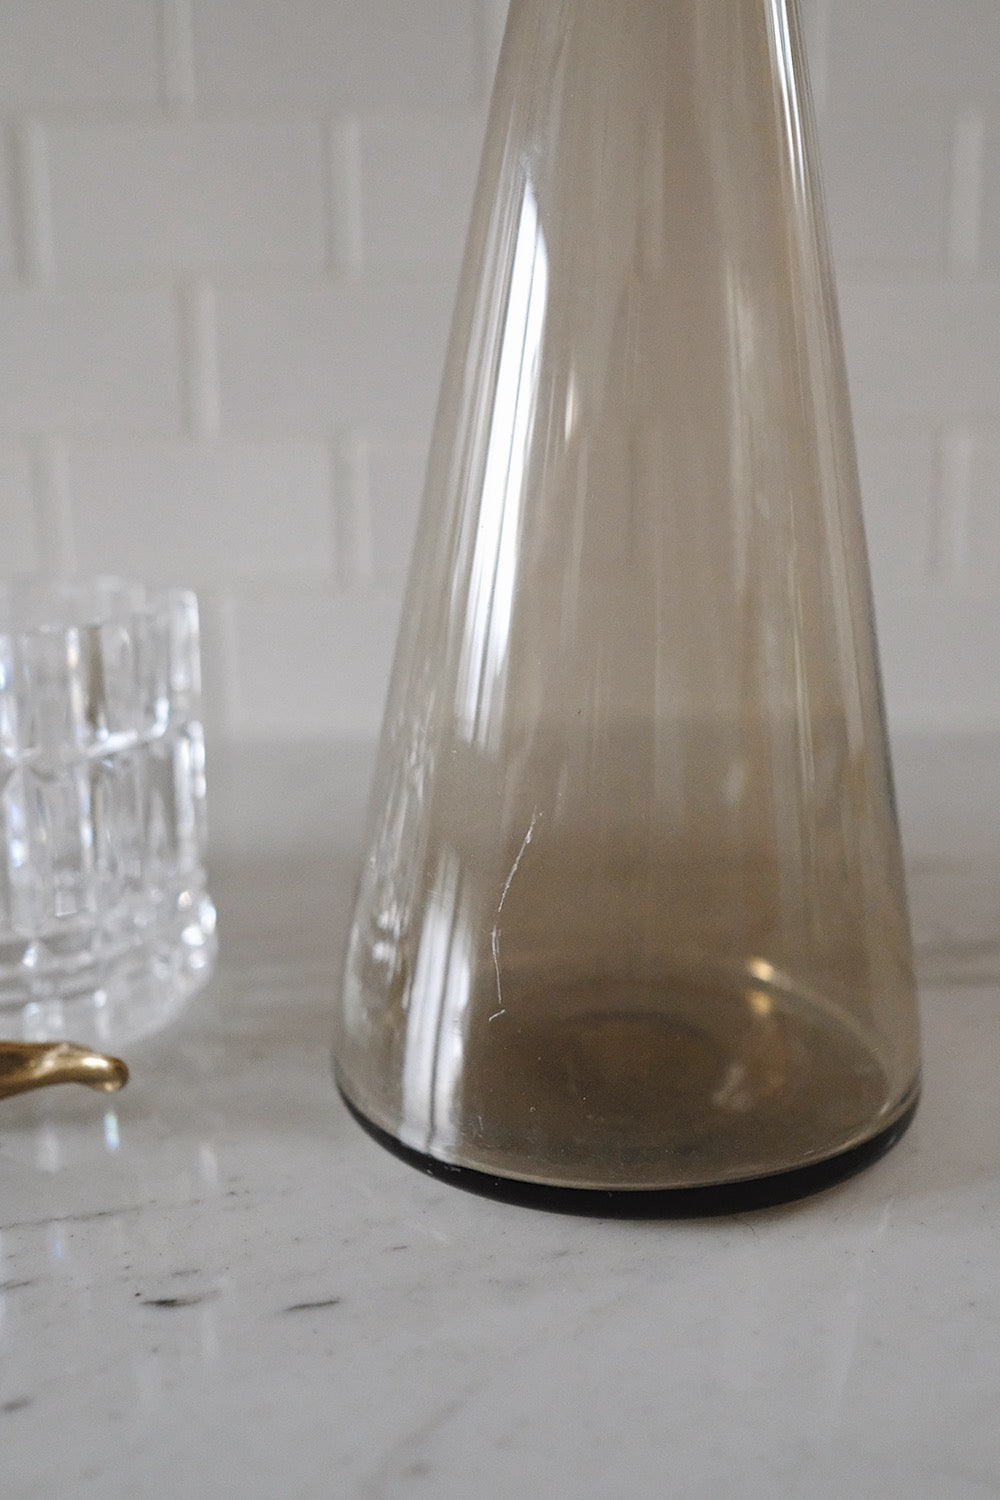 smoked glass decanter